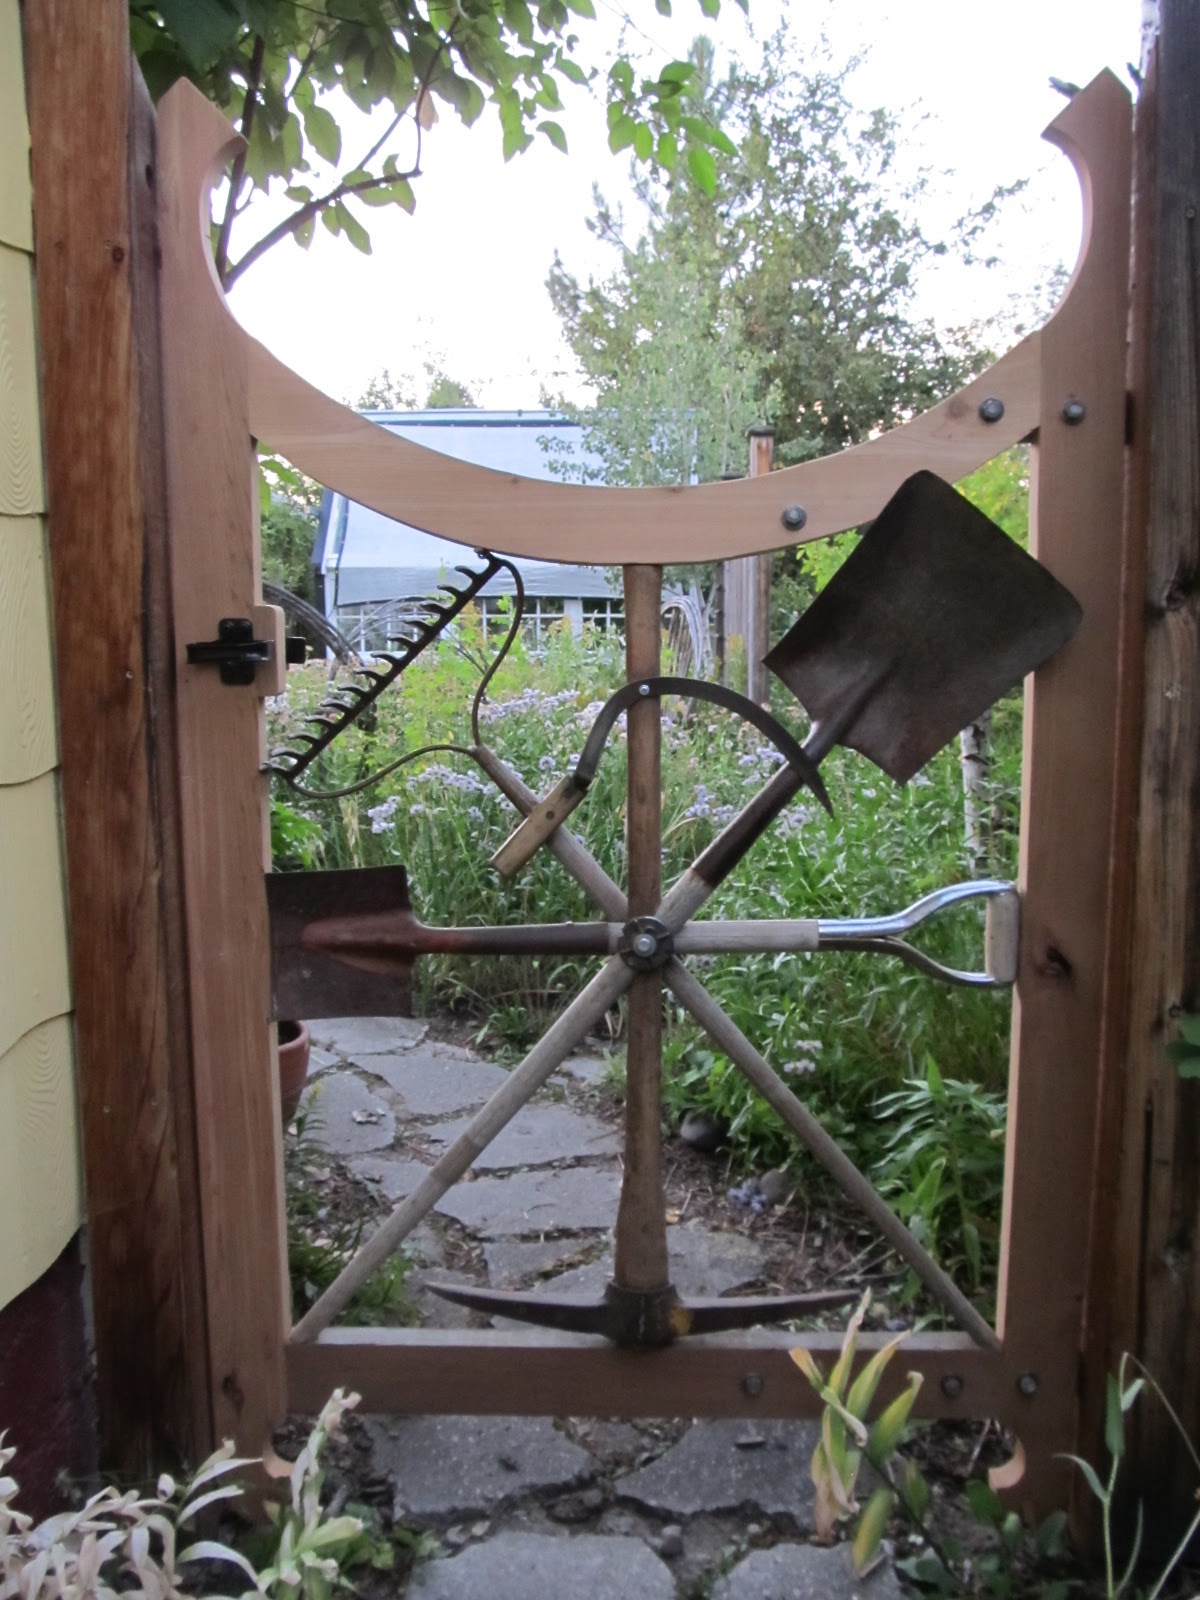 Montana Wildlife Gardener: a repurposed garden tool ...